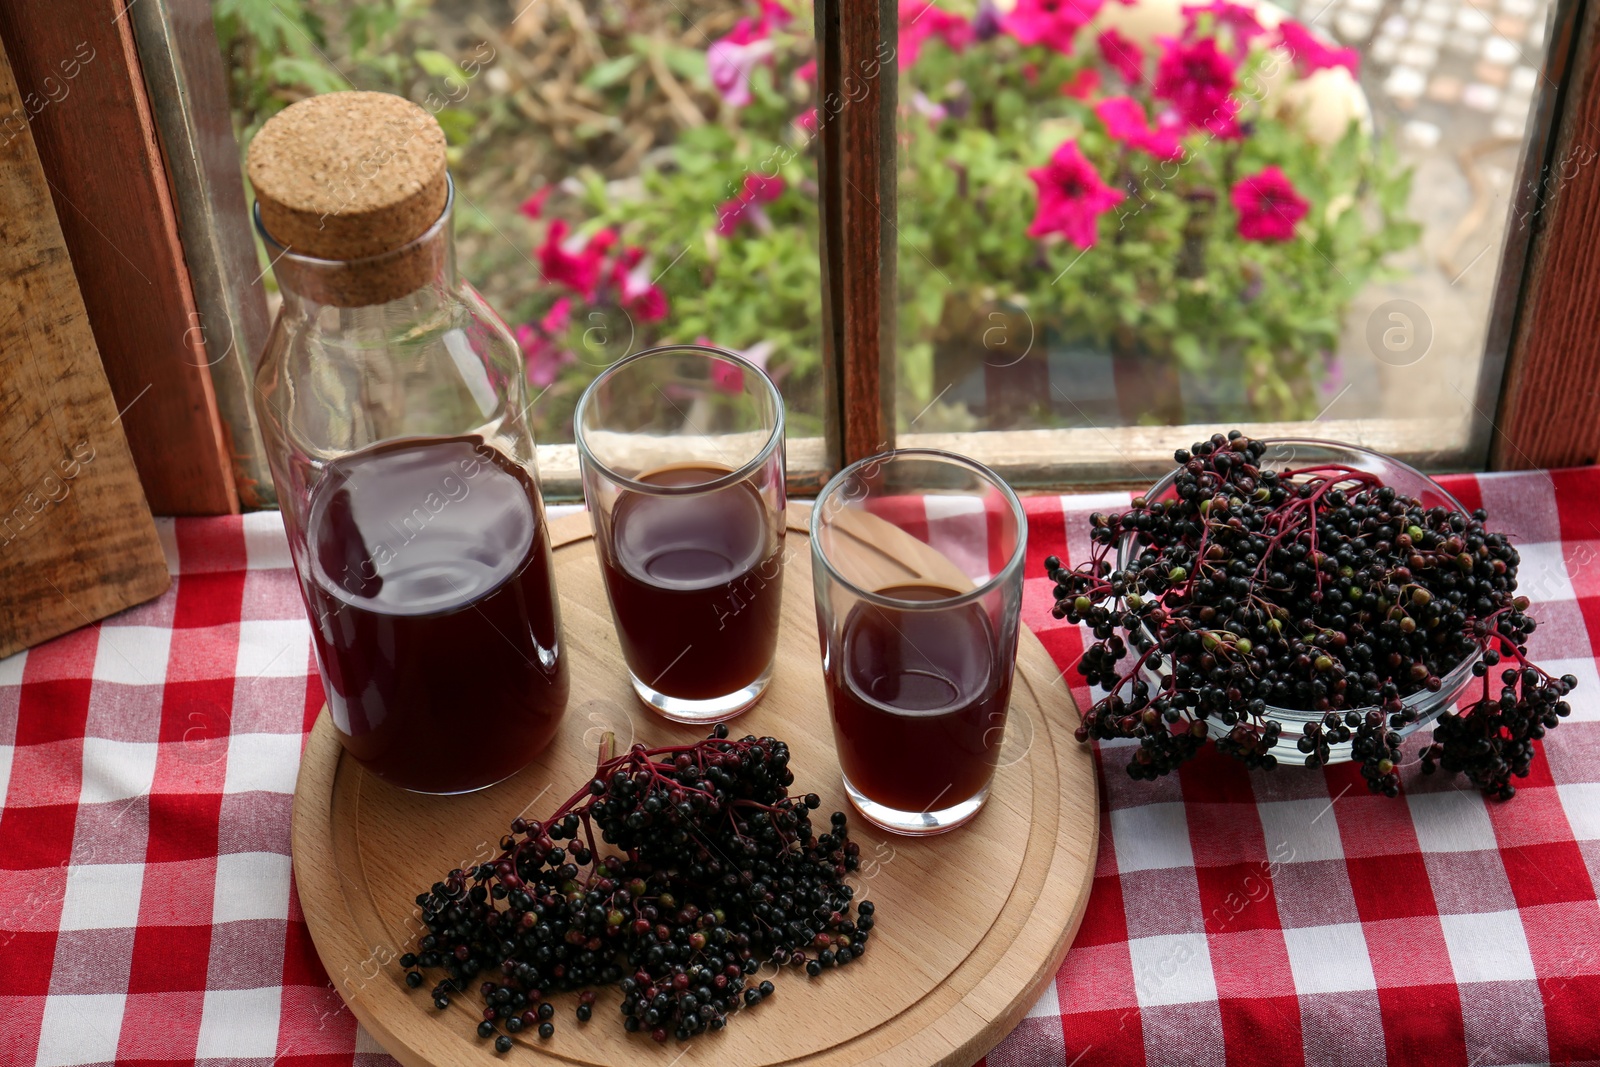 Photo of Elderberry drink and Sambucus berries on table near window